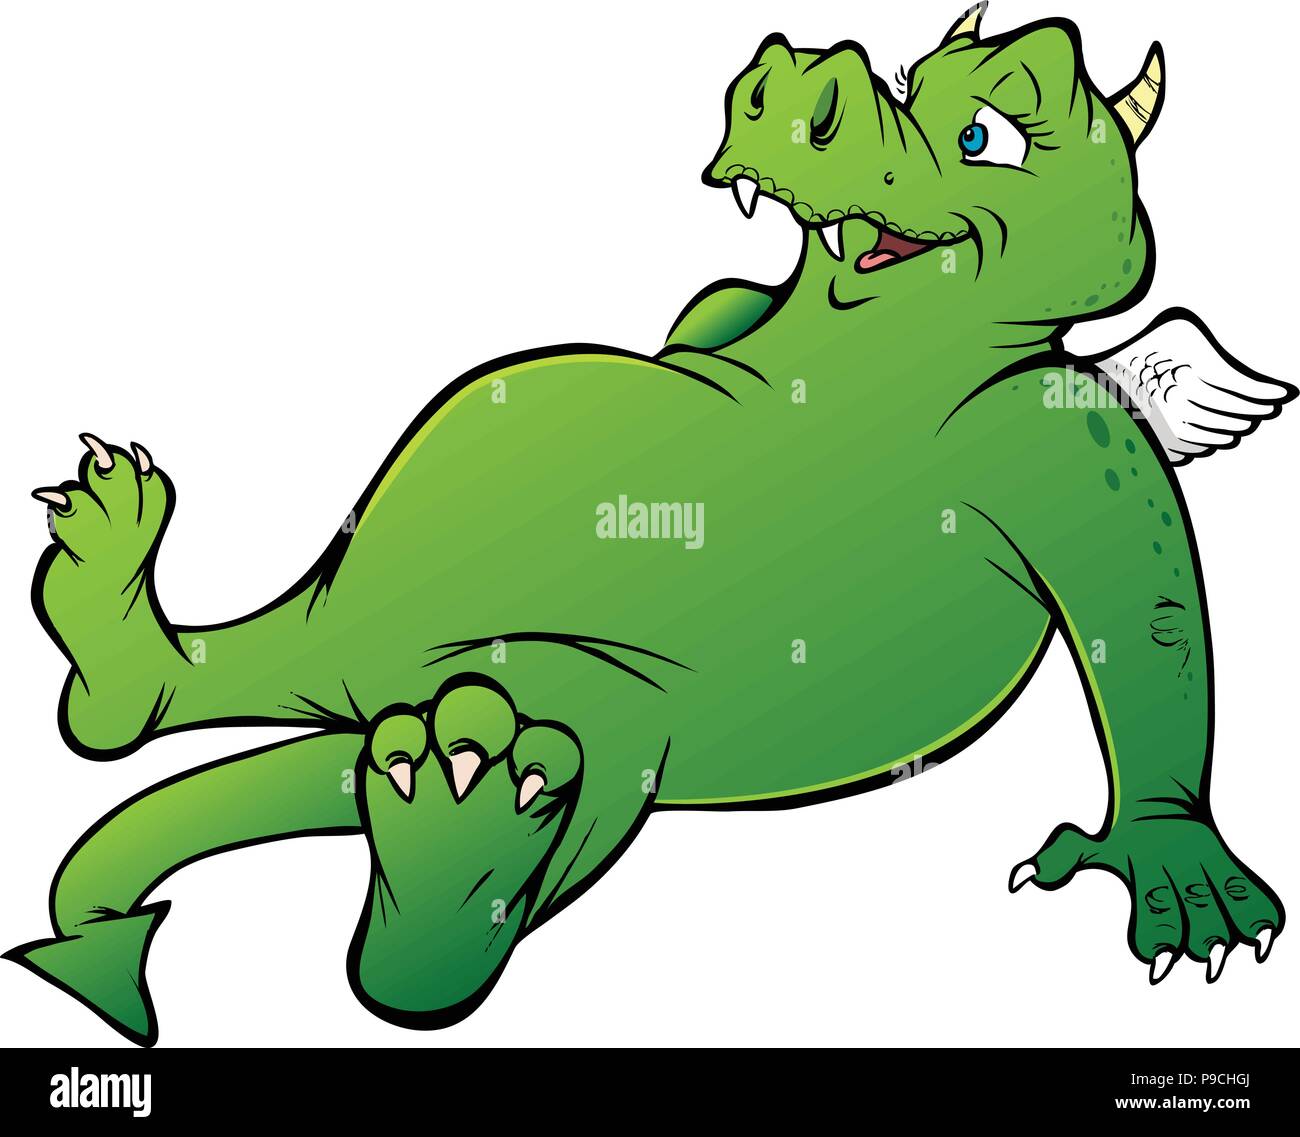 cartoon vector illustration of a friendly dragon sitting Stock Vector